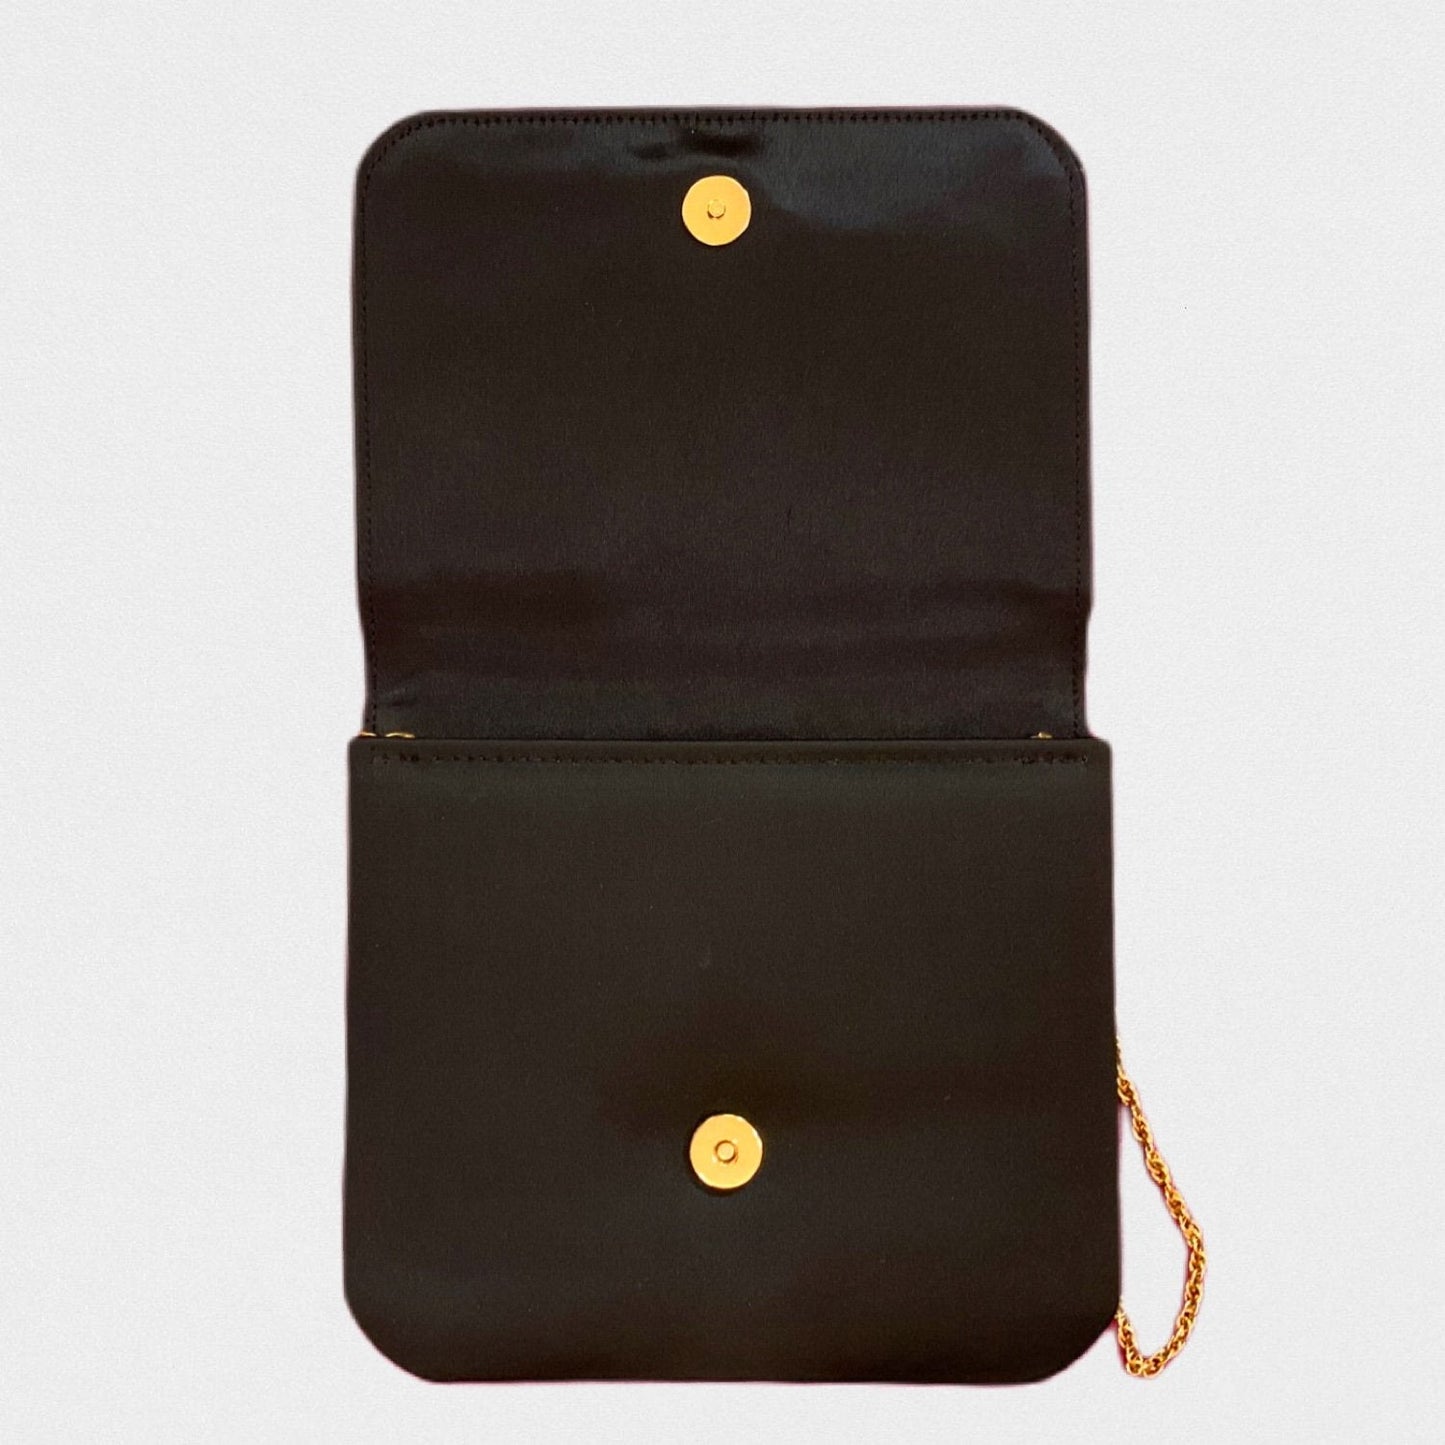 Lysis vintage Pierre Cardin small shoulder bag in silk satin